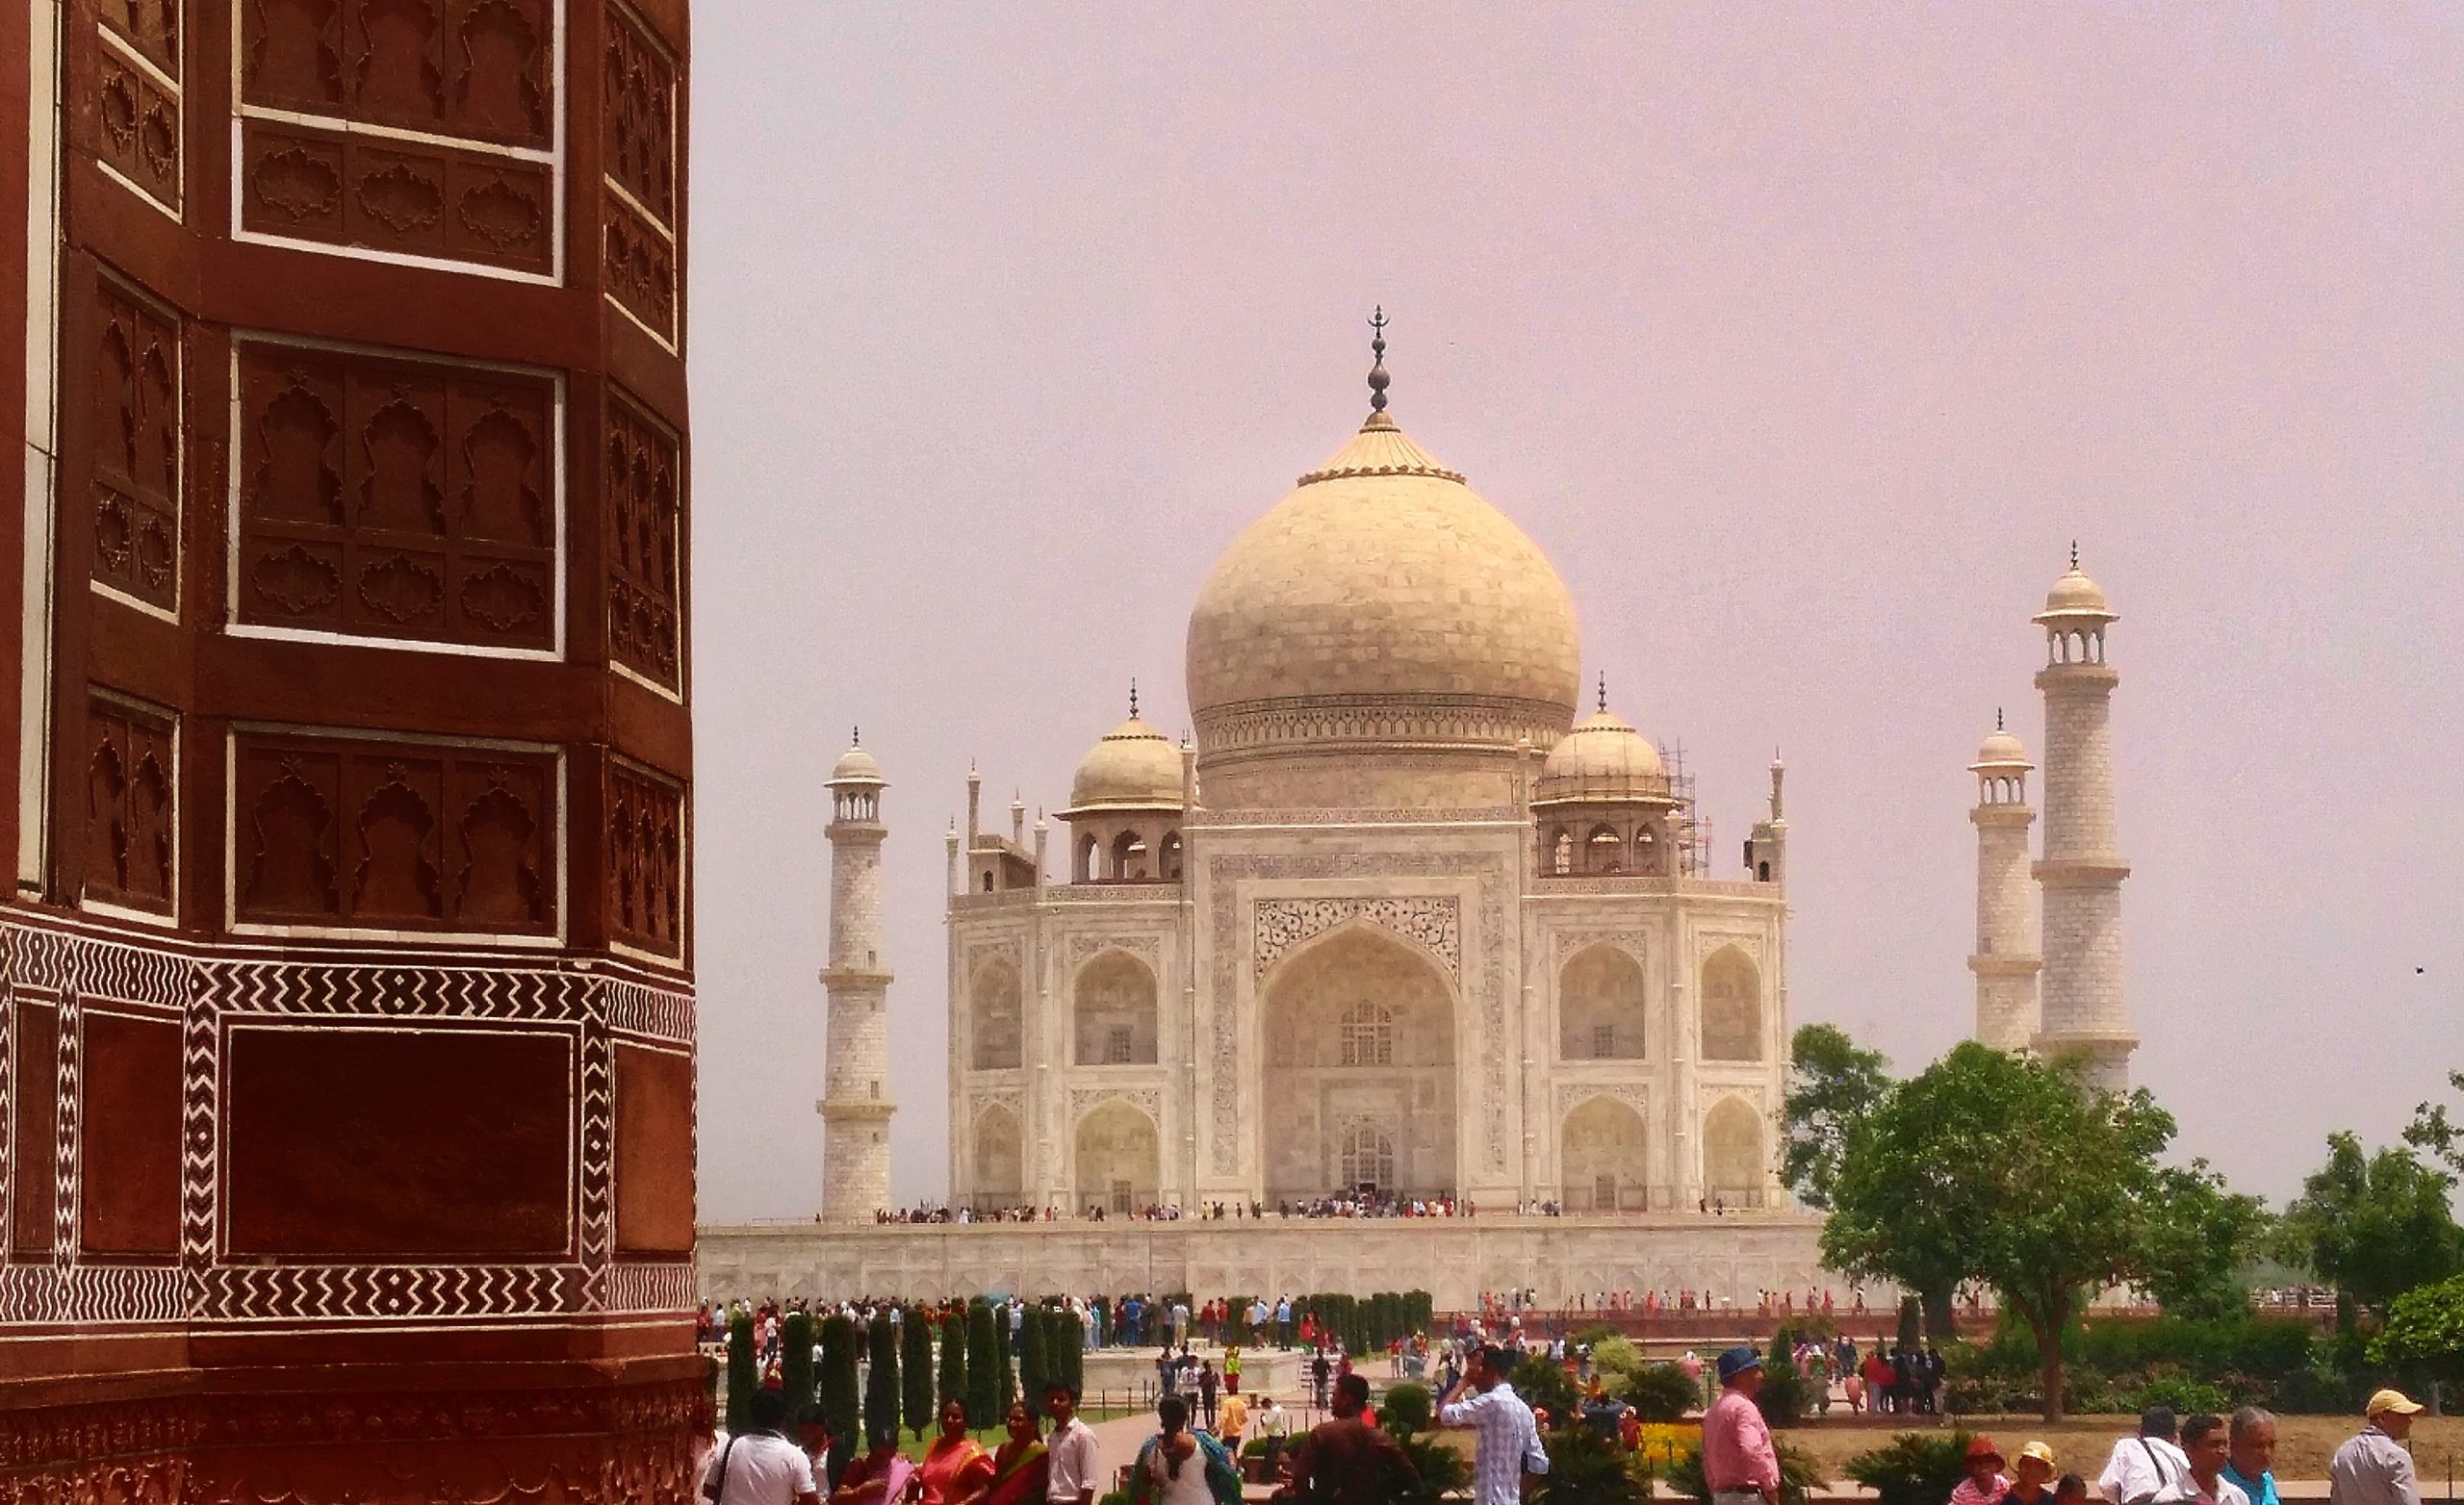 Taj Mahal view from entrance